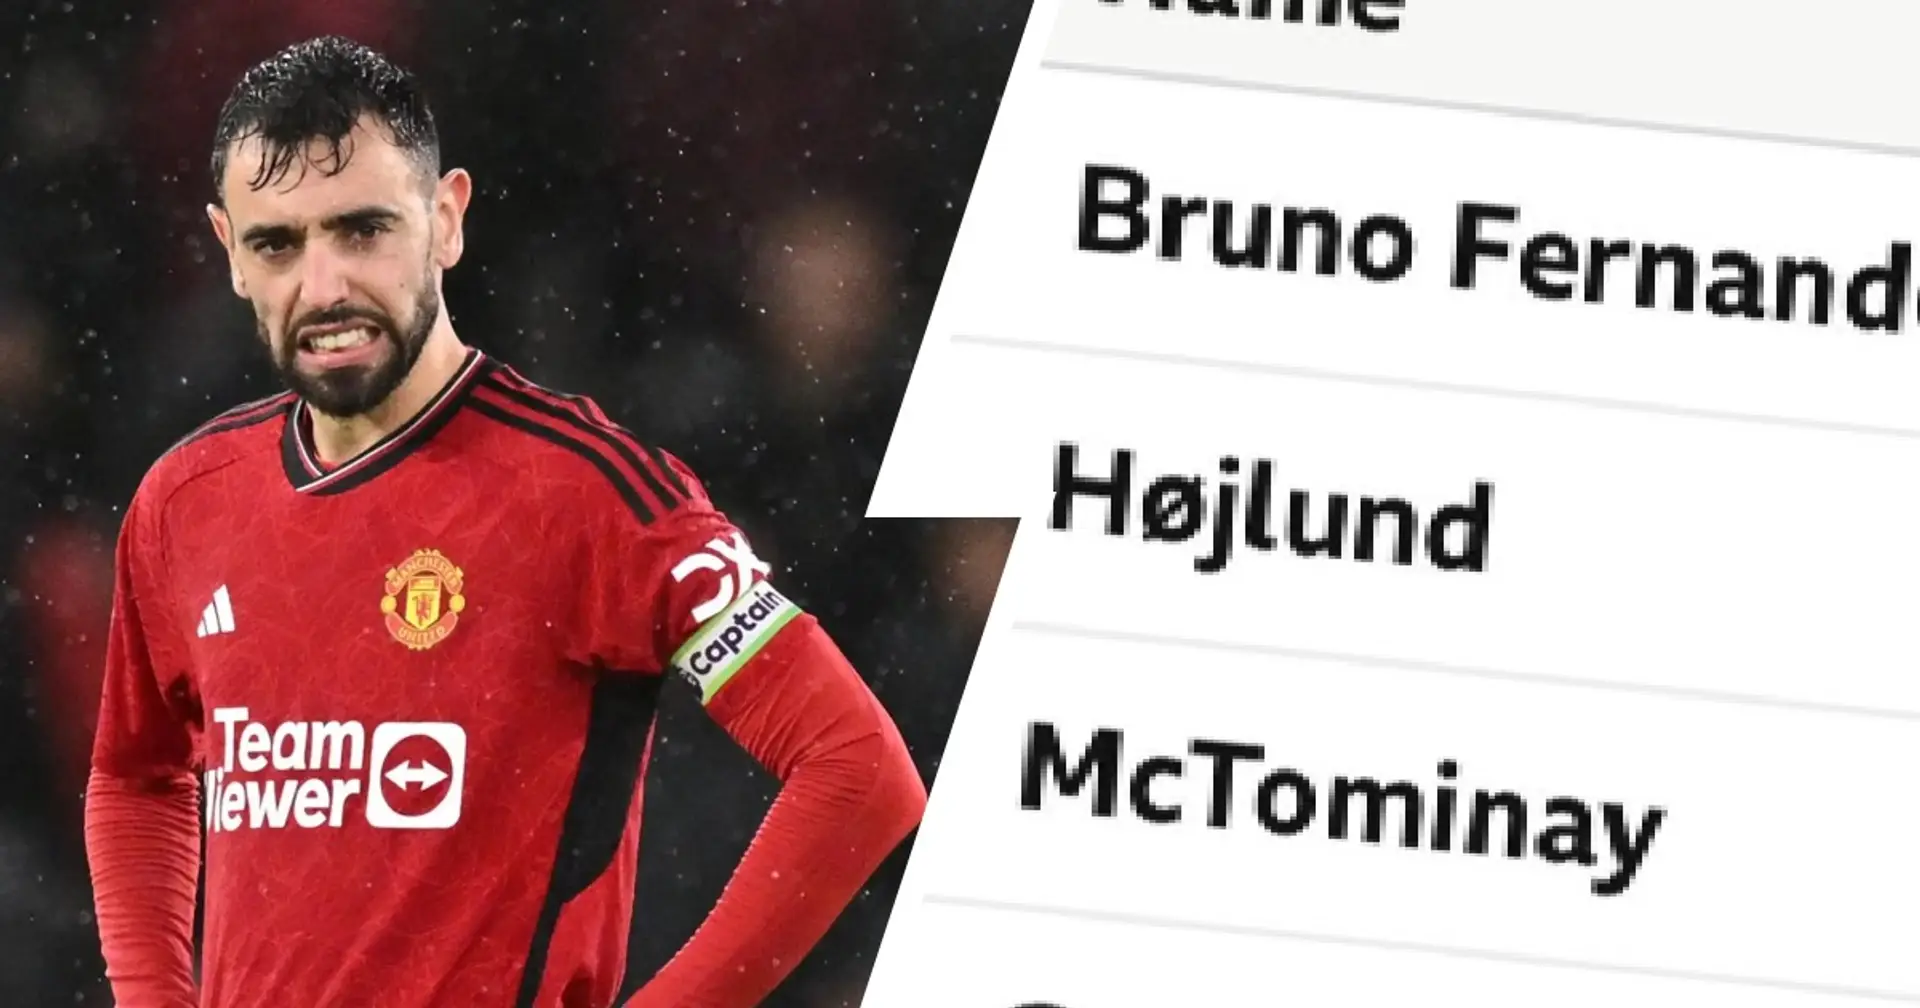 Bruno, Hojlund & more: Man United's top 10 goalscorers this season 